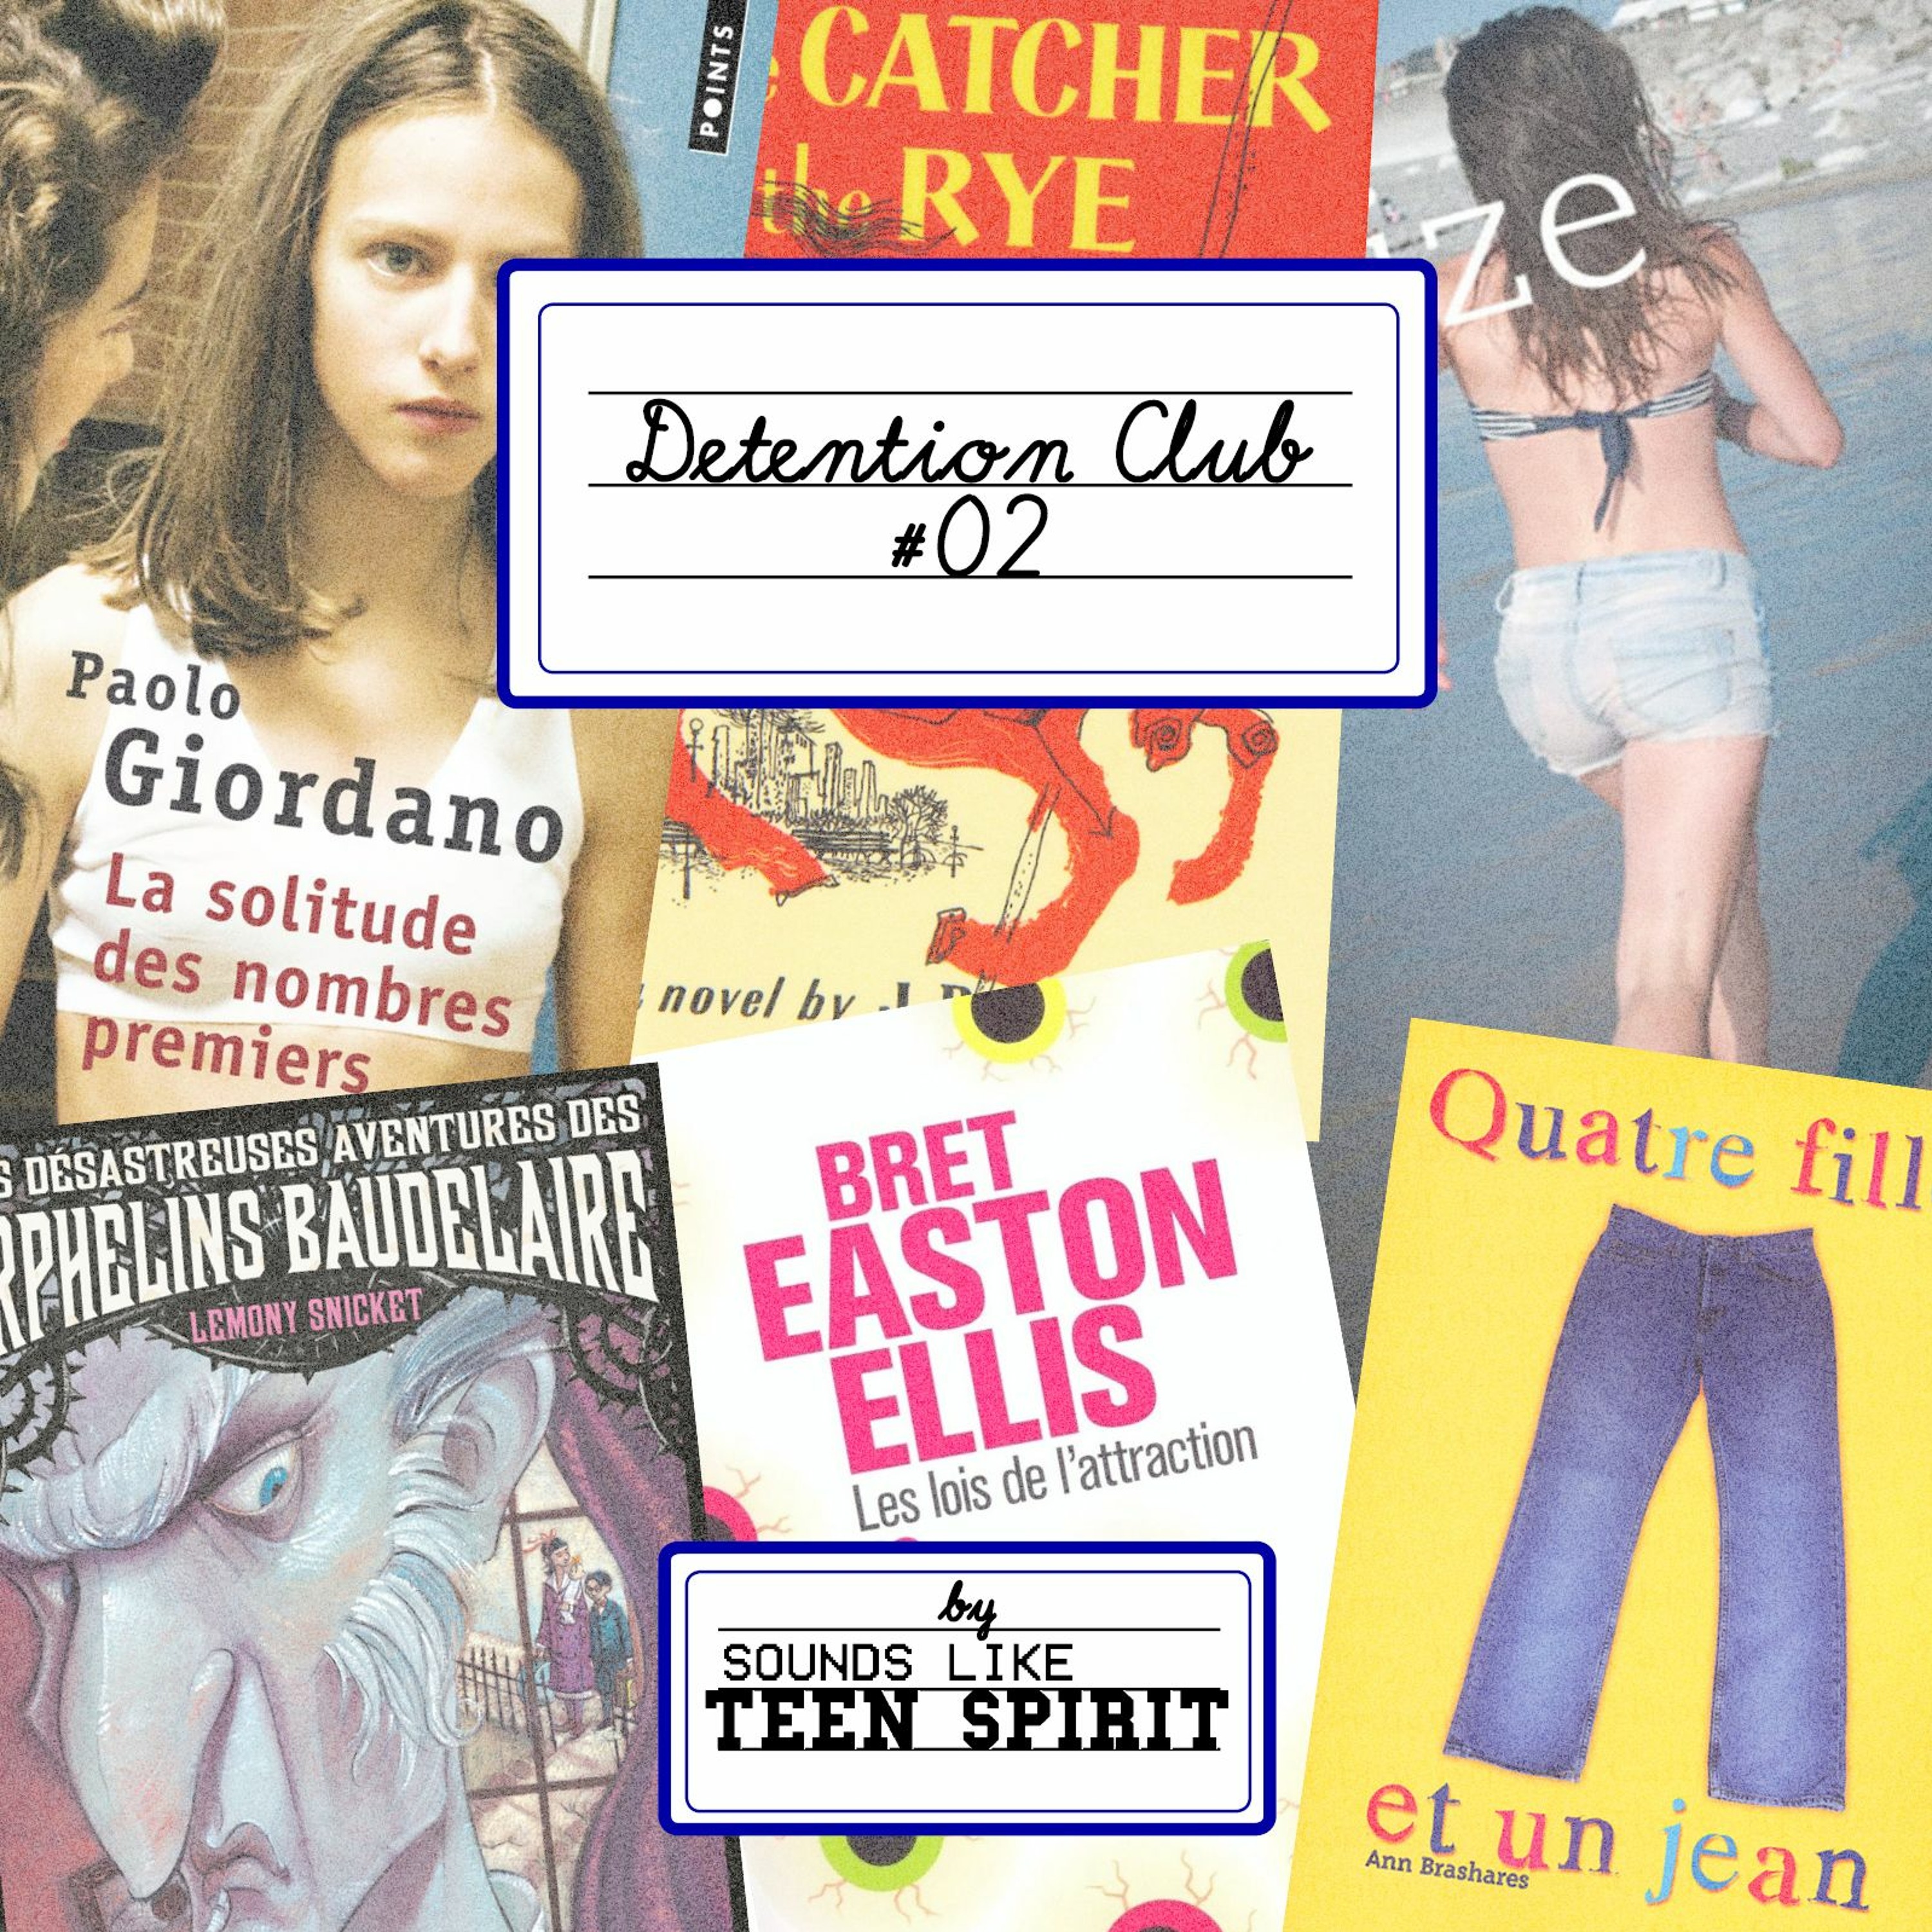 DETENTION CLUB #02 – La littérature adolescente